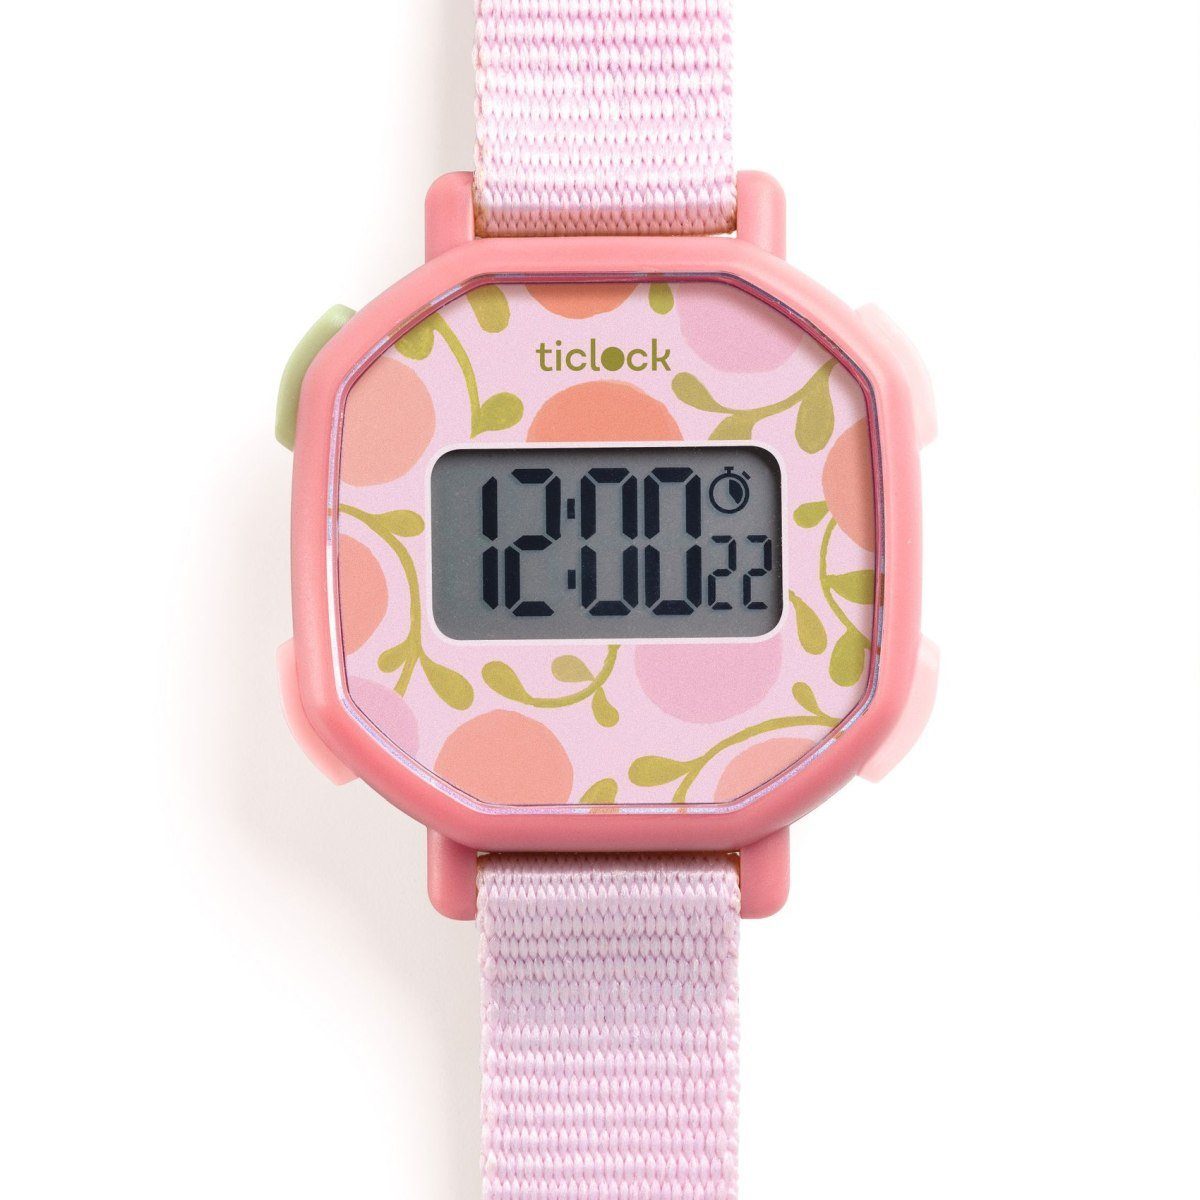 DJECO Digitaluhr Armbanduhr digital Beleuchtung Stoppuhr Kinderuhr inkl. Batterie